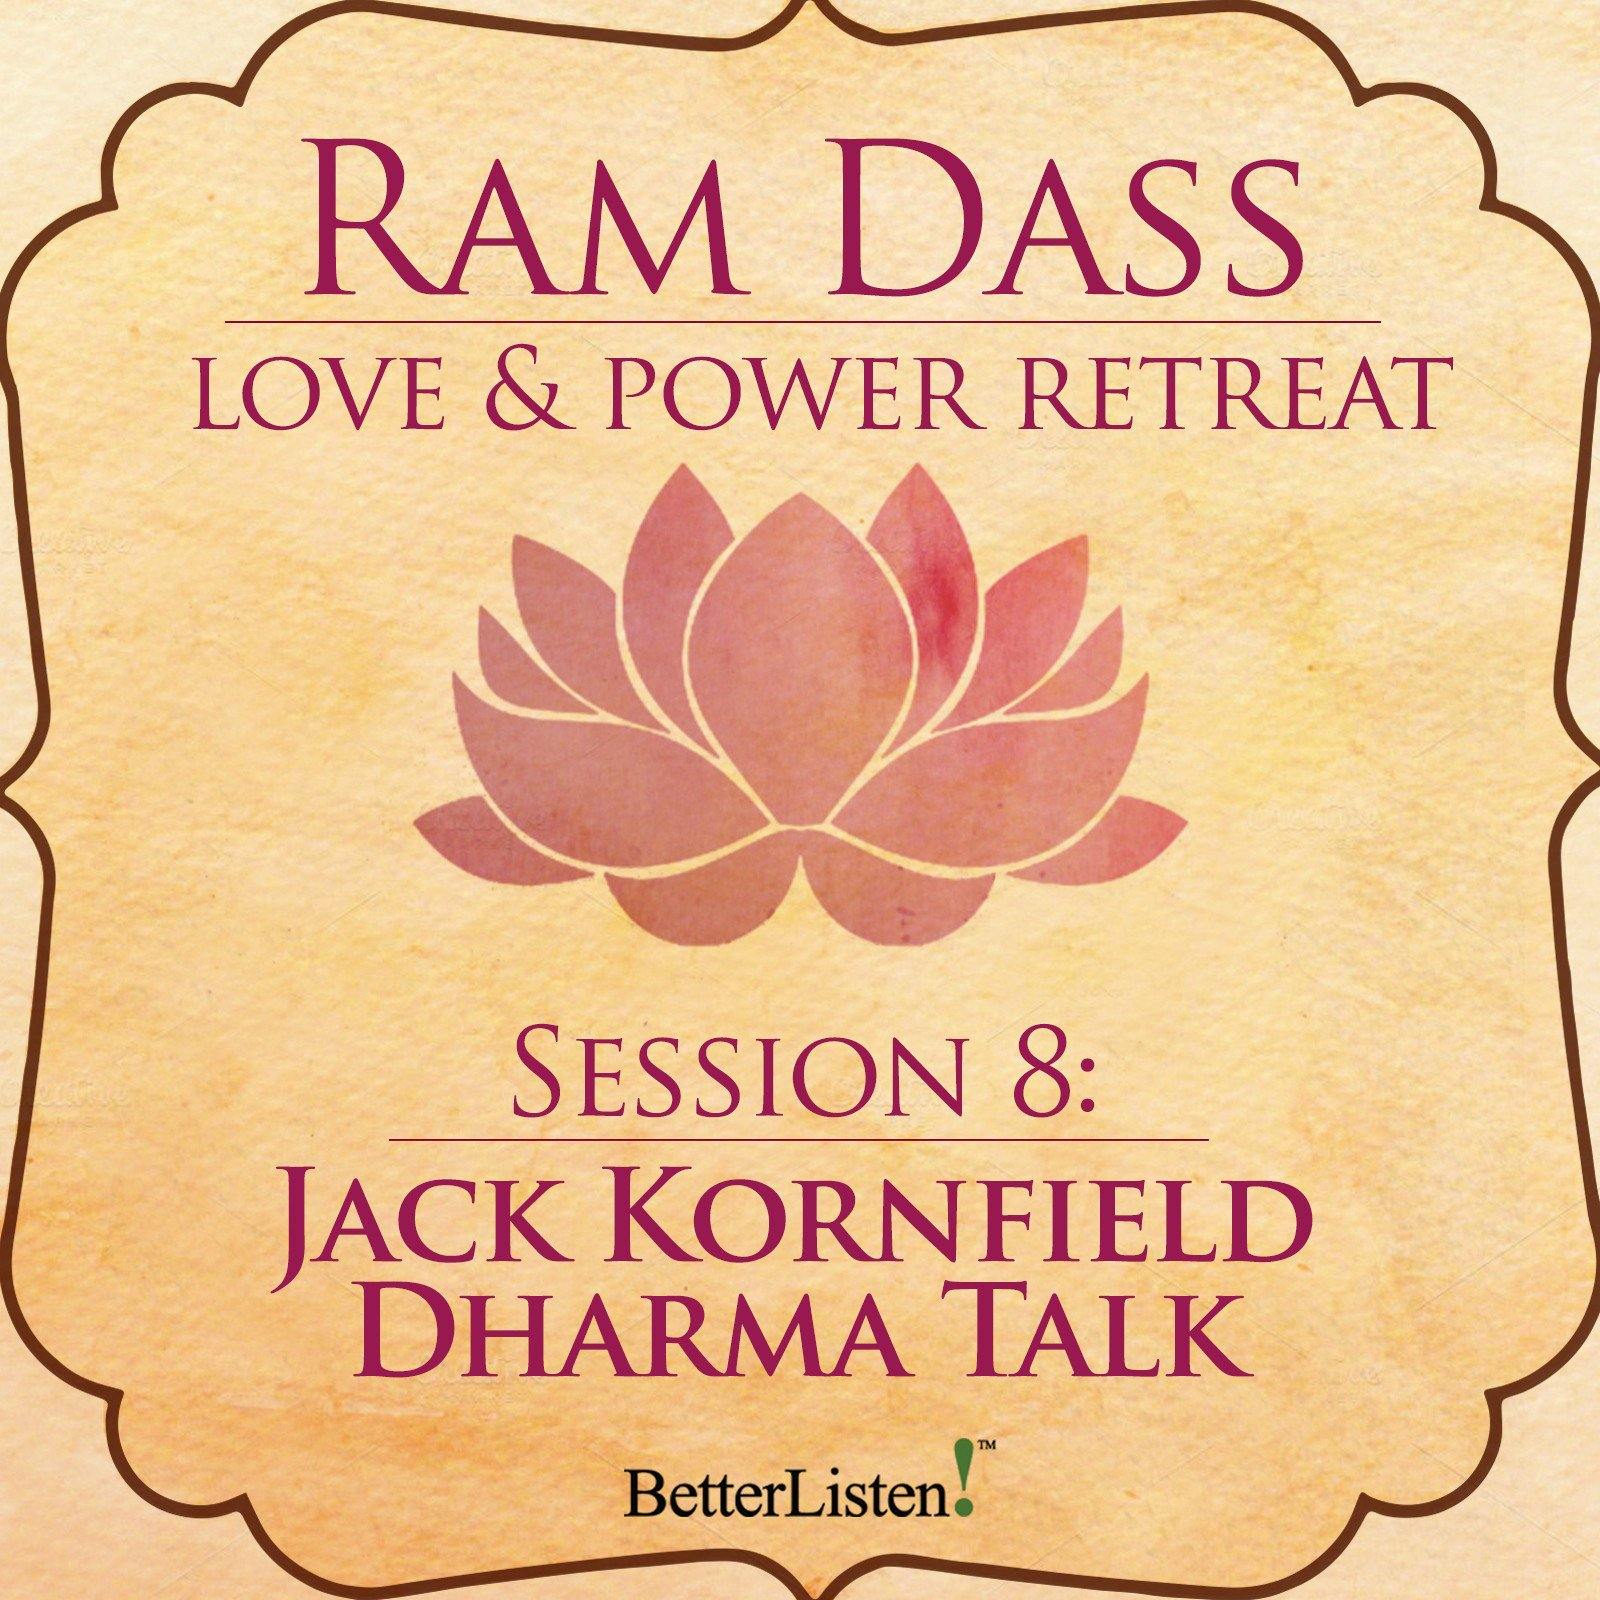 Jack Kornfield Dharma Talk from the Love and Power Retreat Audio Program Ram Dass LSR - BetterListen!